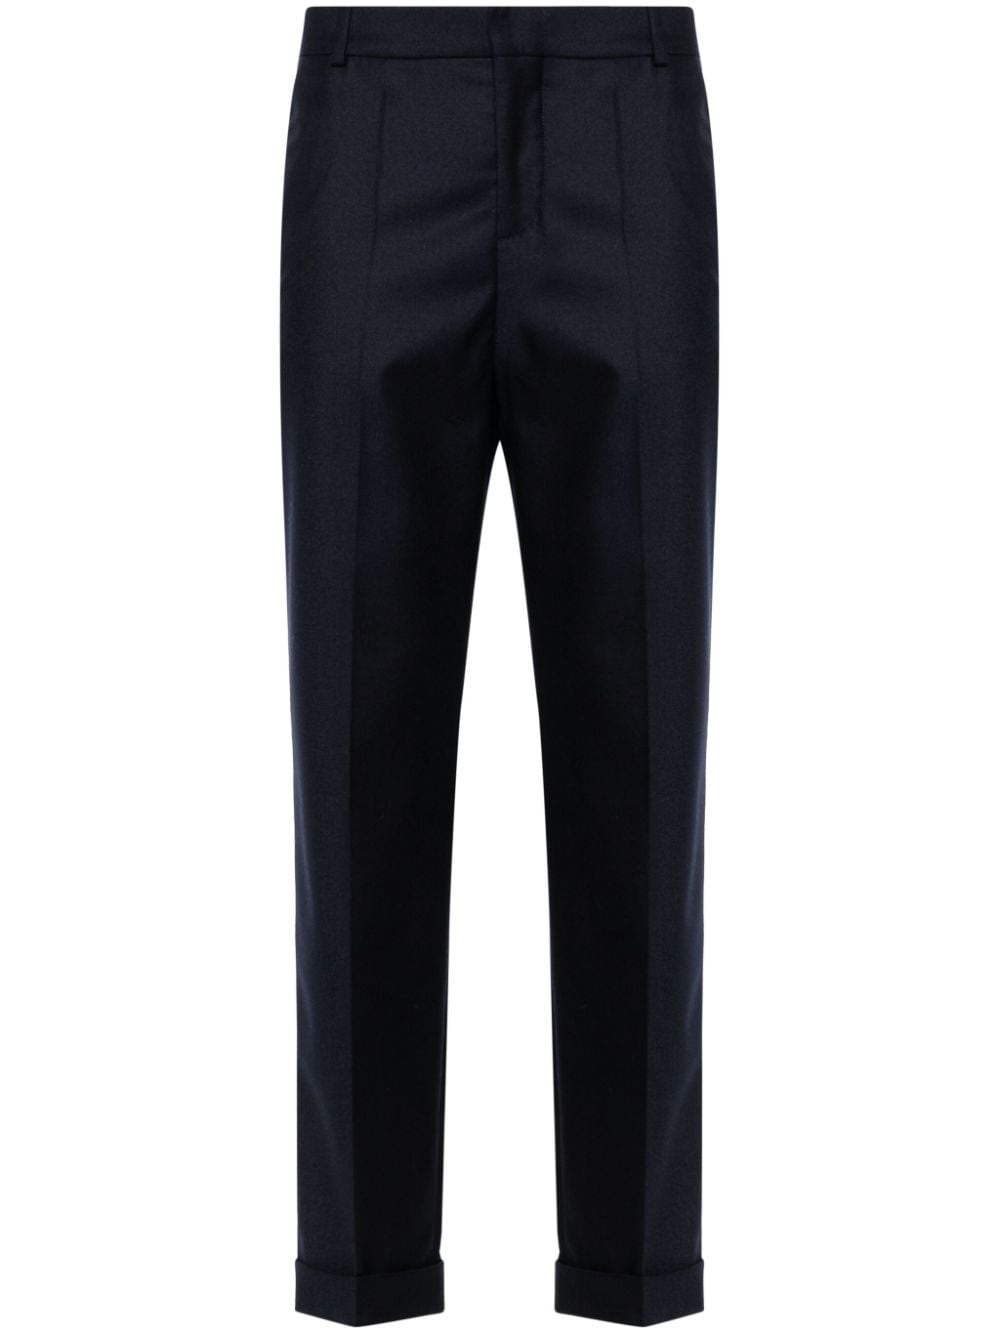 Image 1 of Balmain vrigin-wool tailored trousers